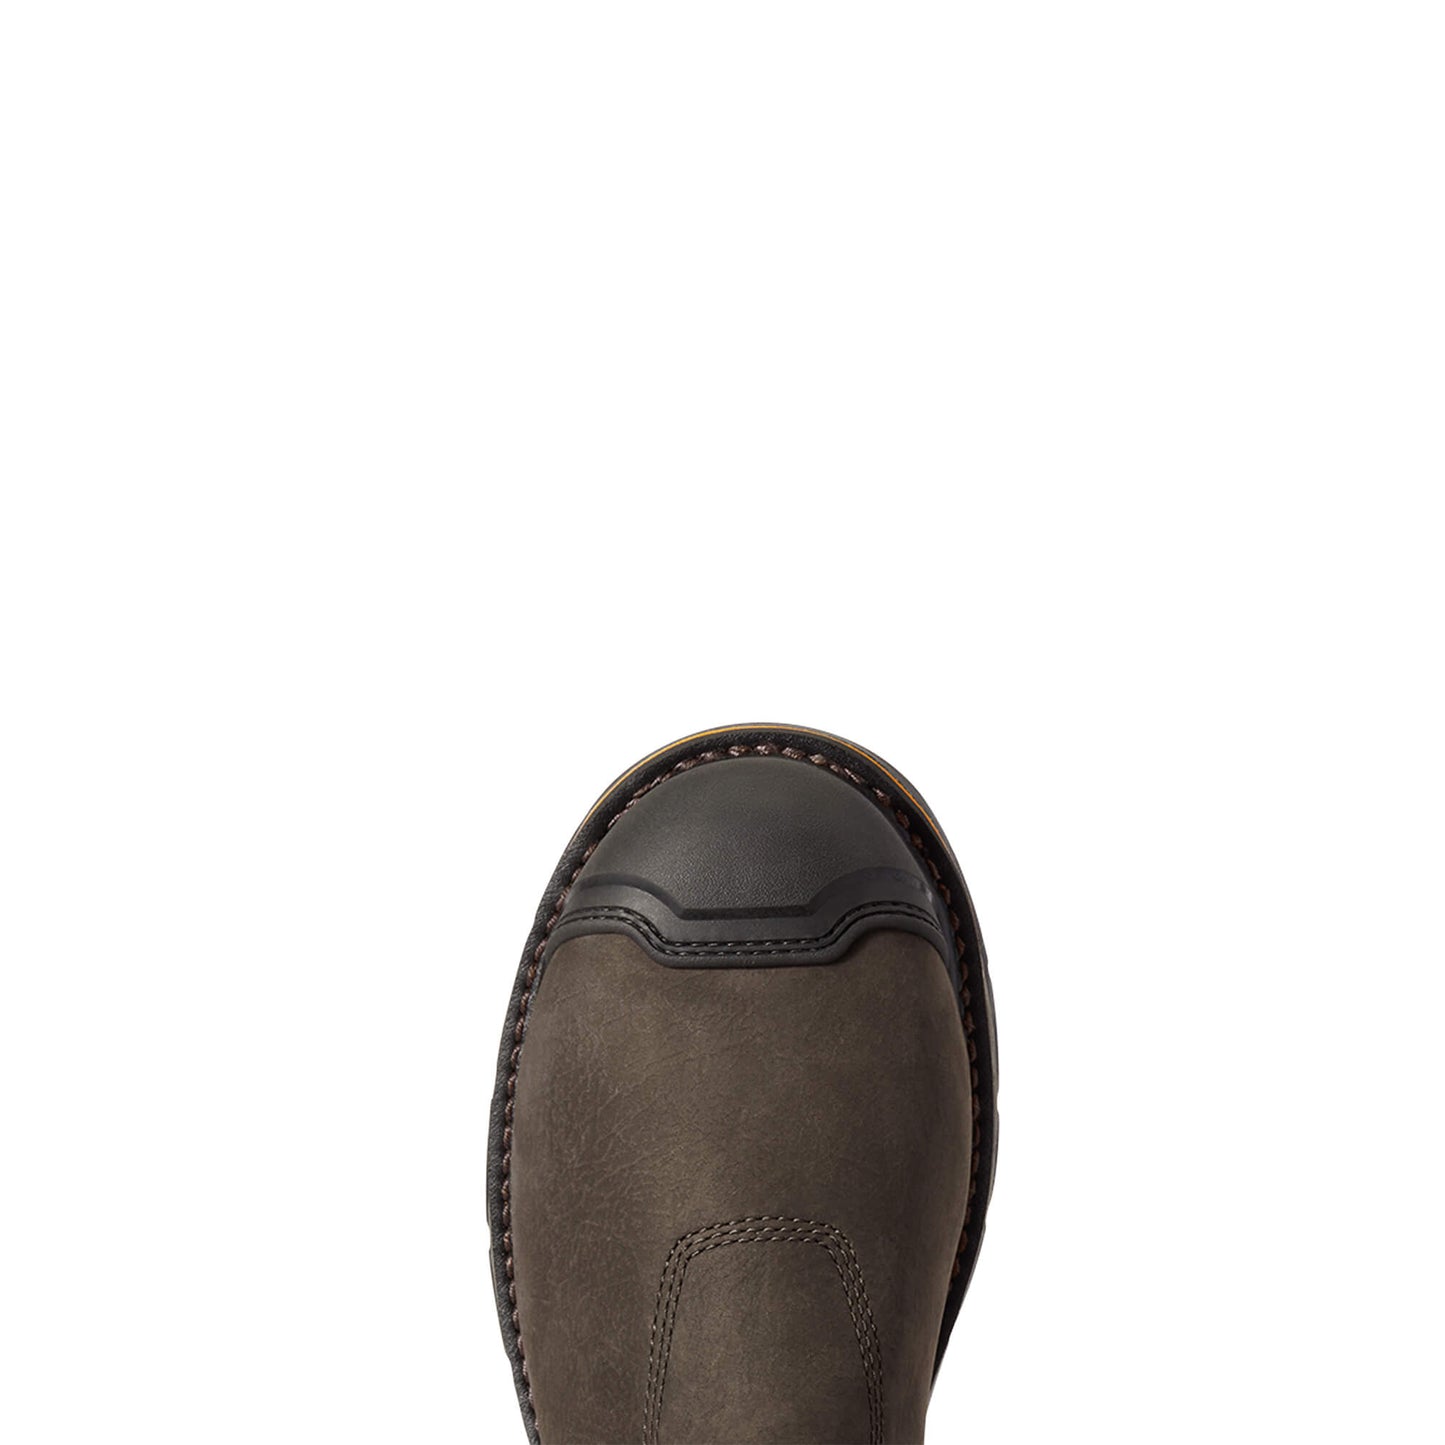 Ariat® Men's Stump Jumper Pull-On Waterproof Composite Toe Western Work Boots